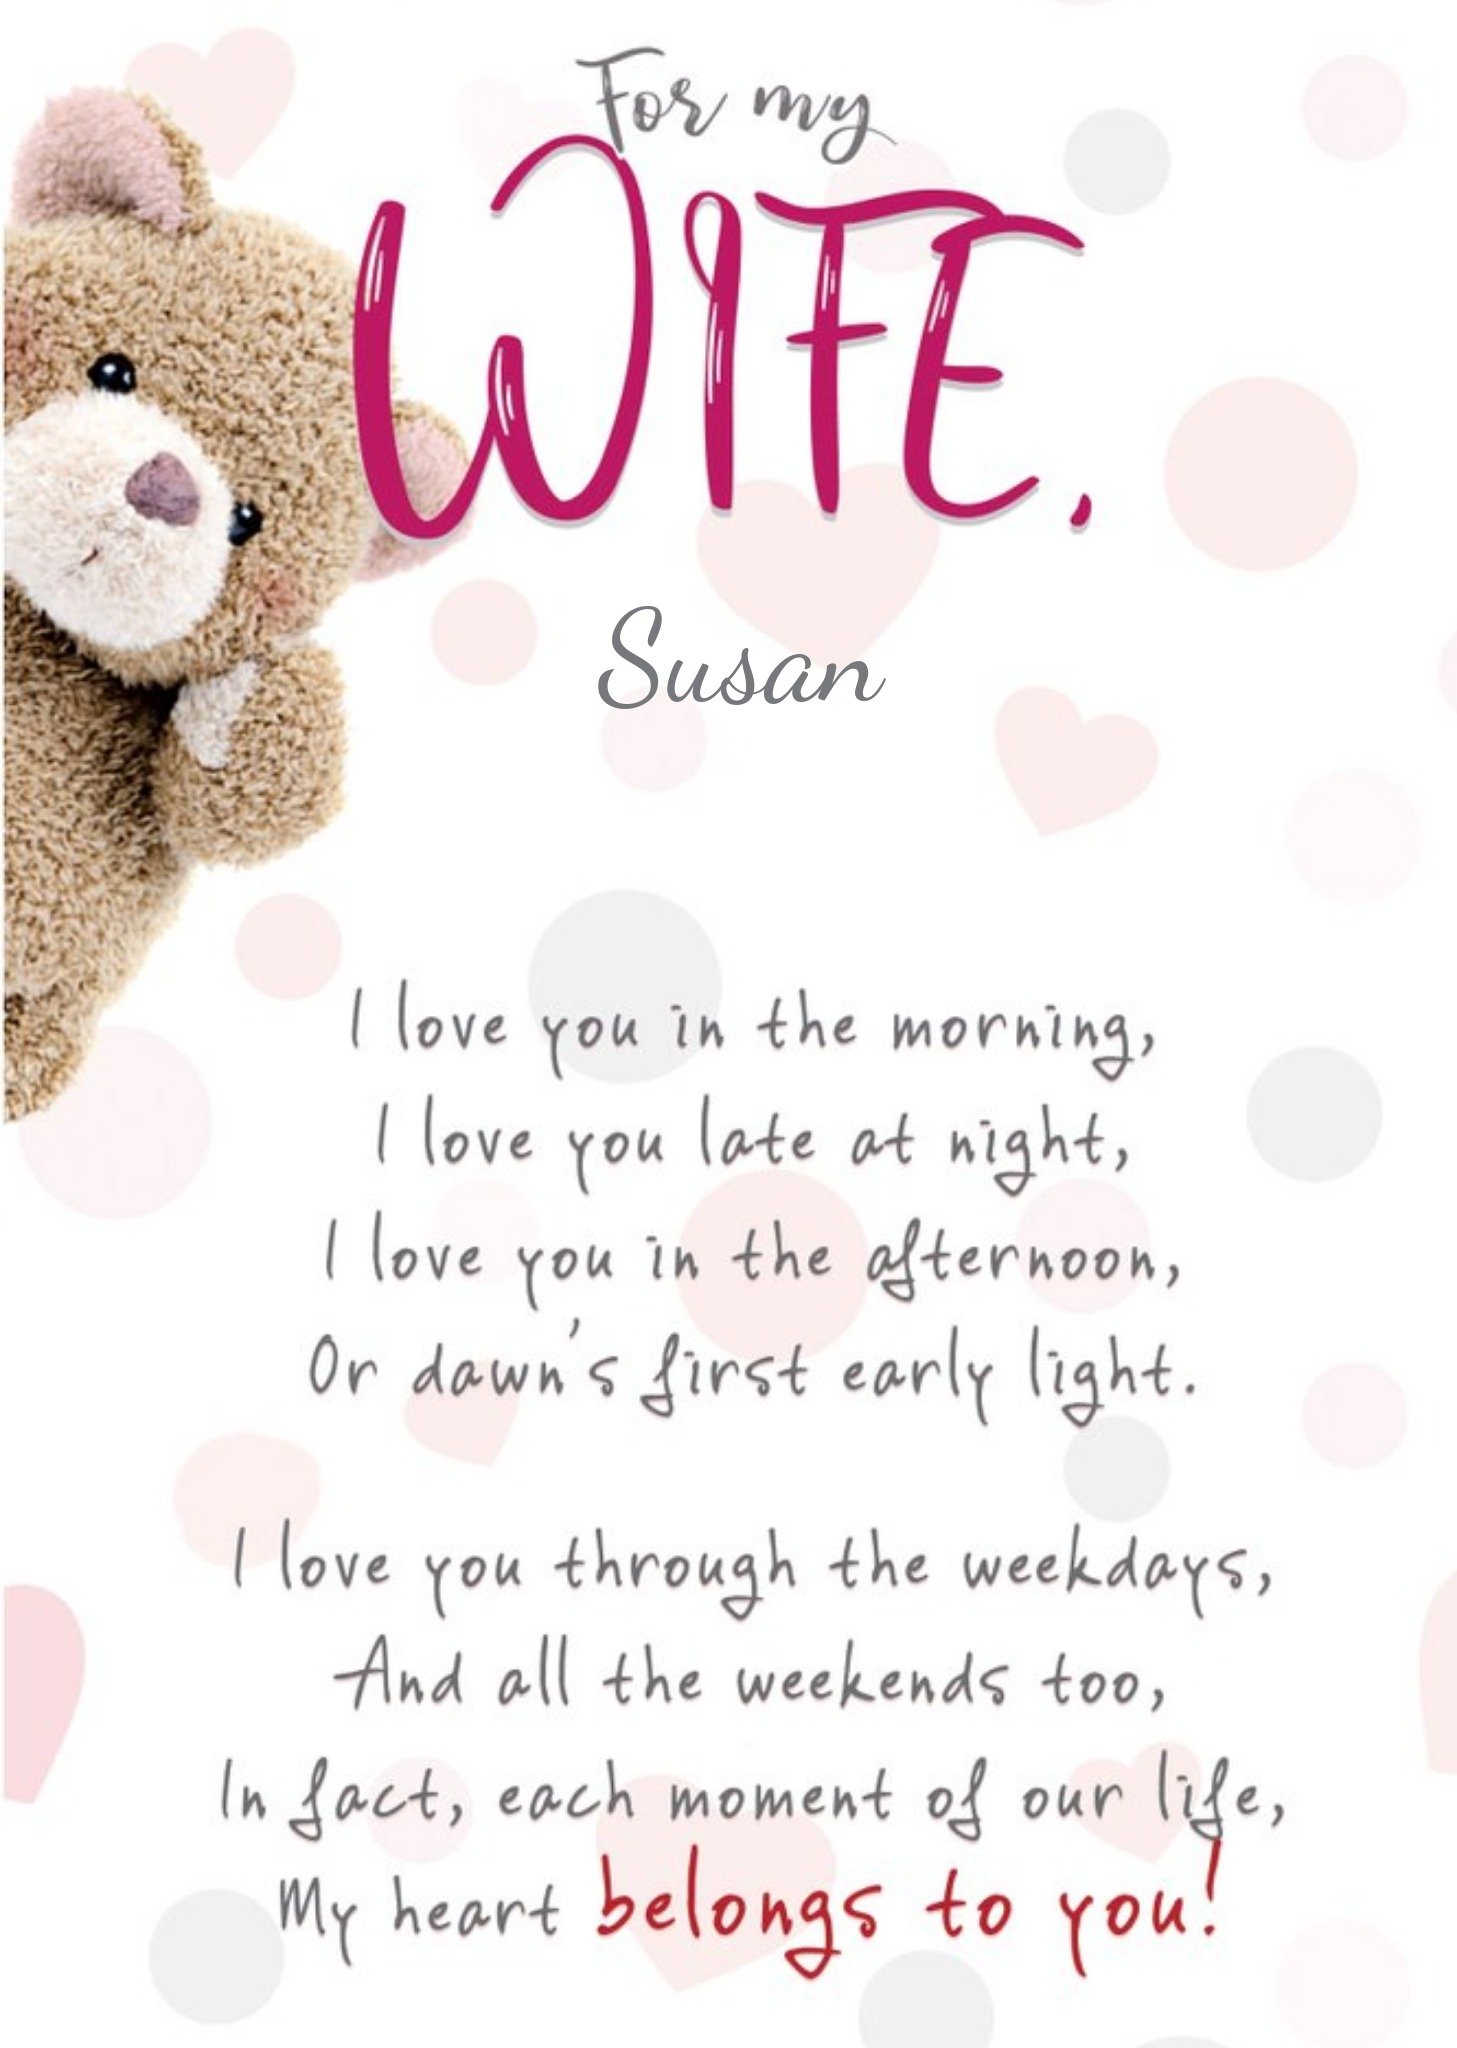 Moonpig Cute Photographic Image Ofteddy Bear Poem Valentines Card Ecard